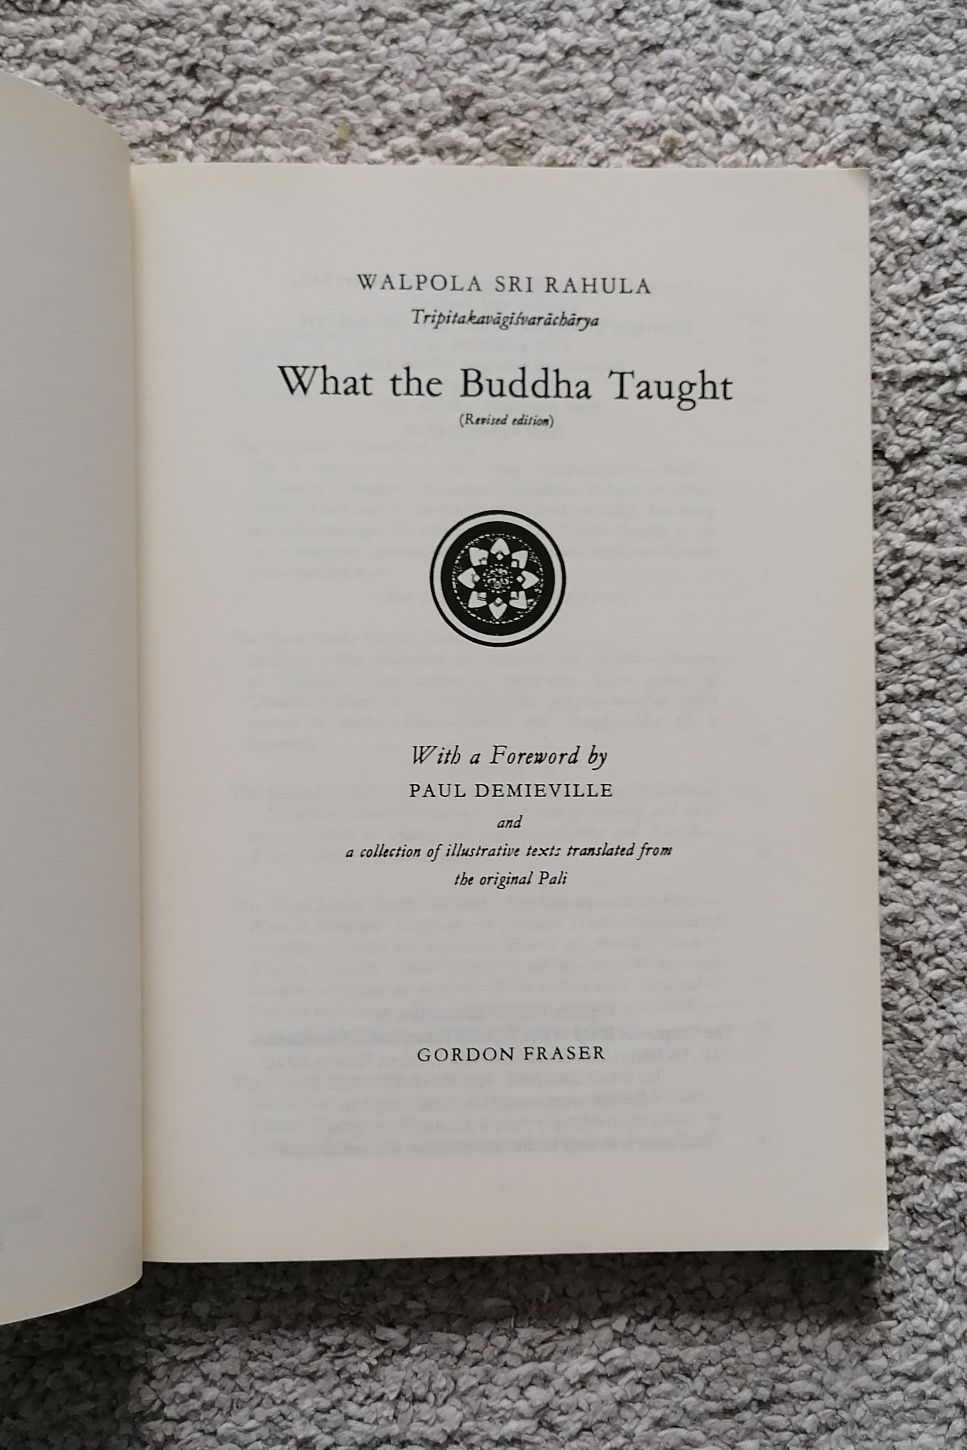 Livro: What The Buddha Taught  de Walpola Rahula